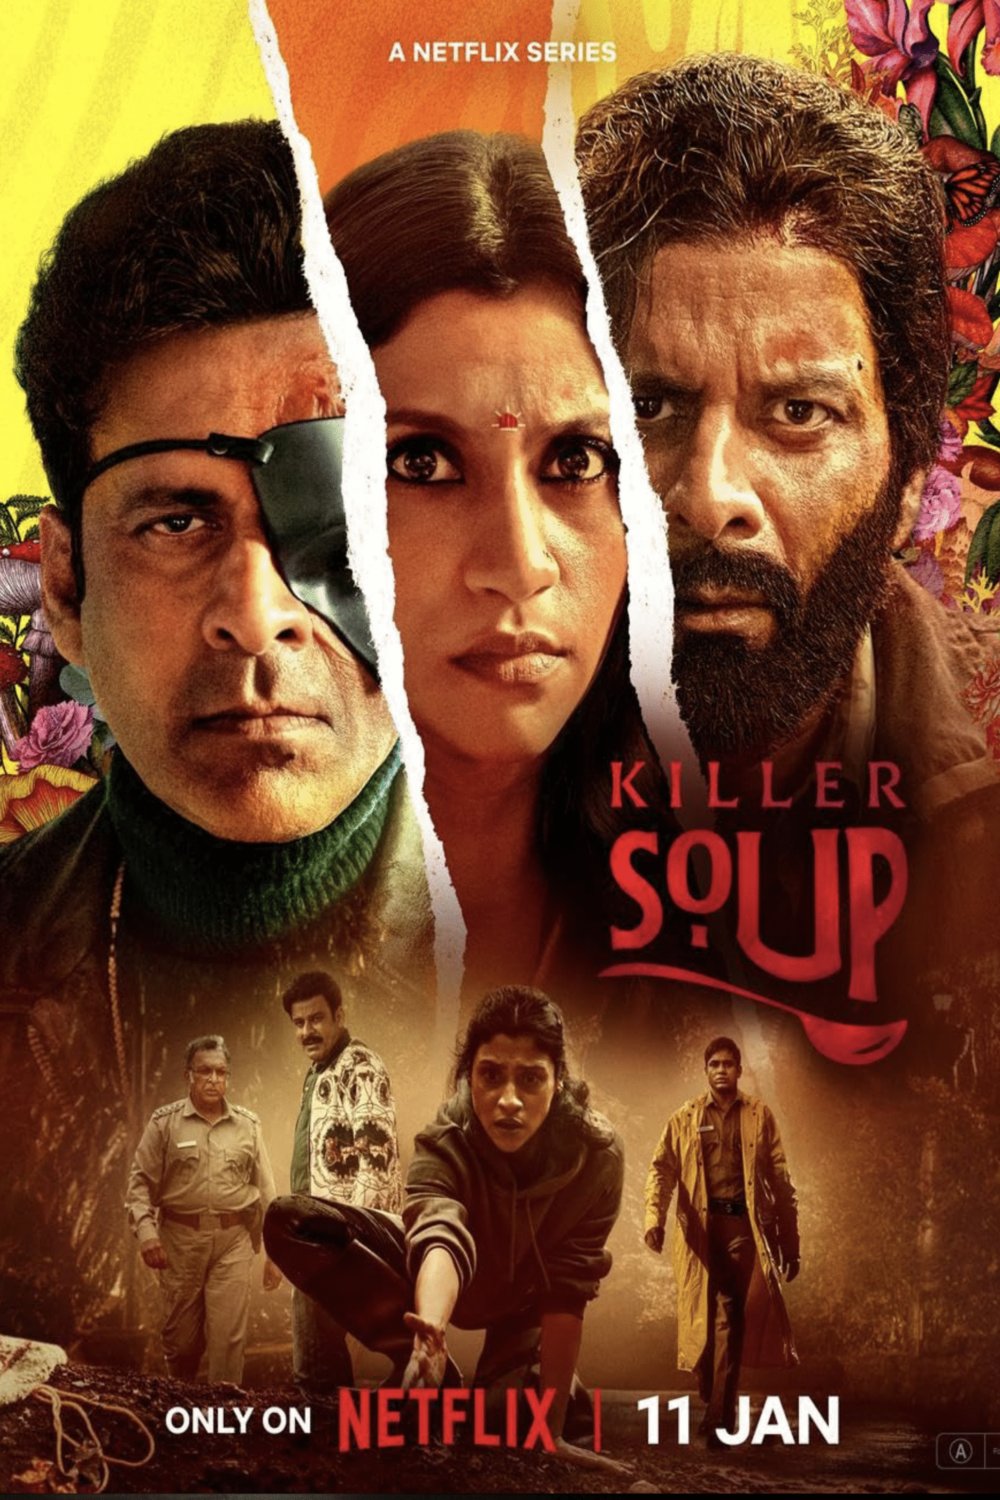 Hindi poster of the movie Killer Soup